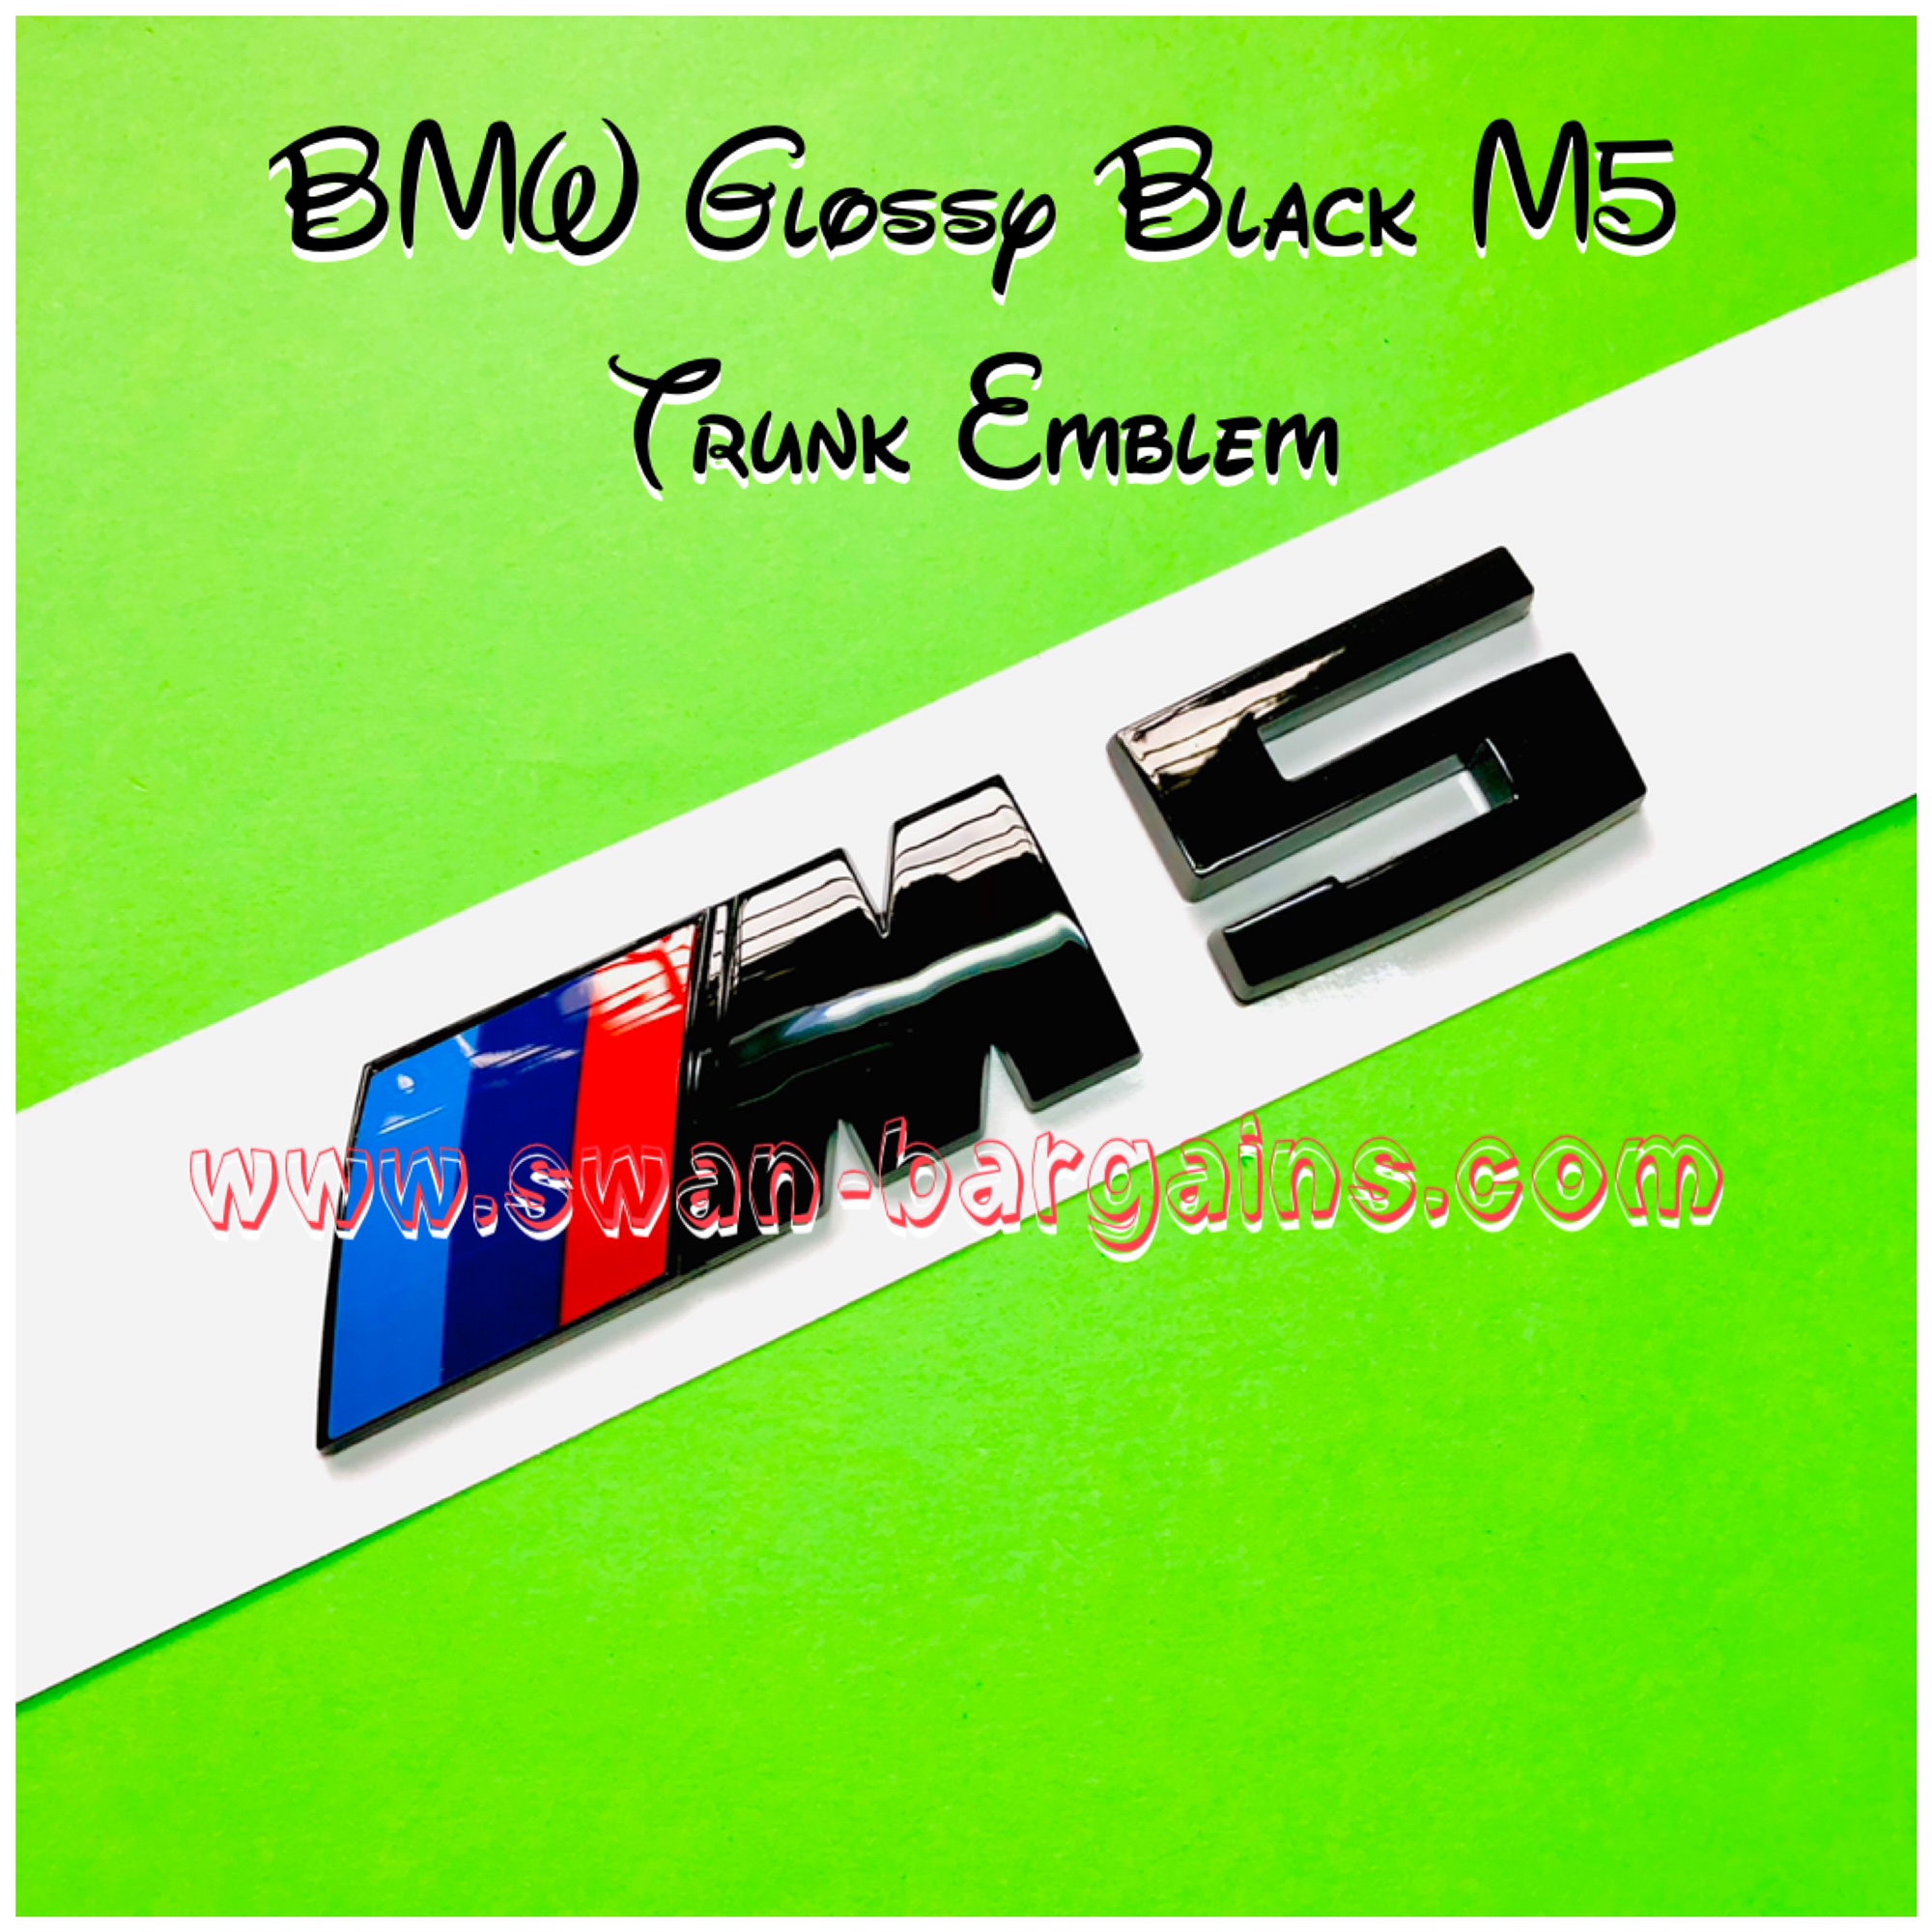 BMW Glossy Black M5 Rear Trunk Emblem USA